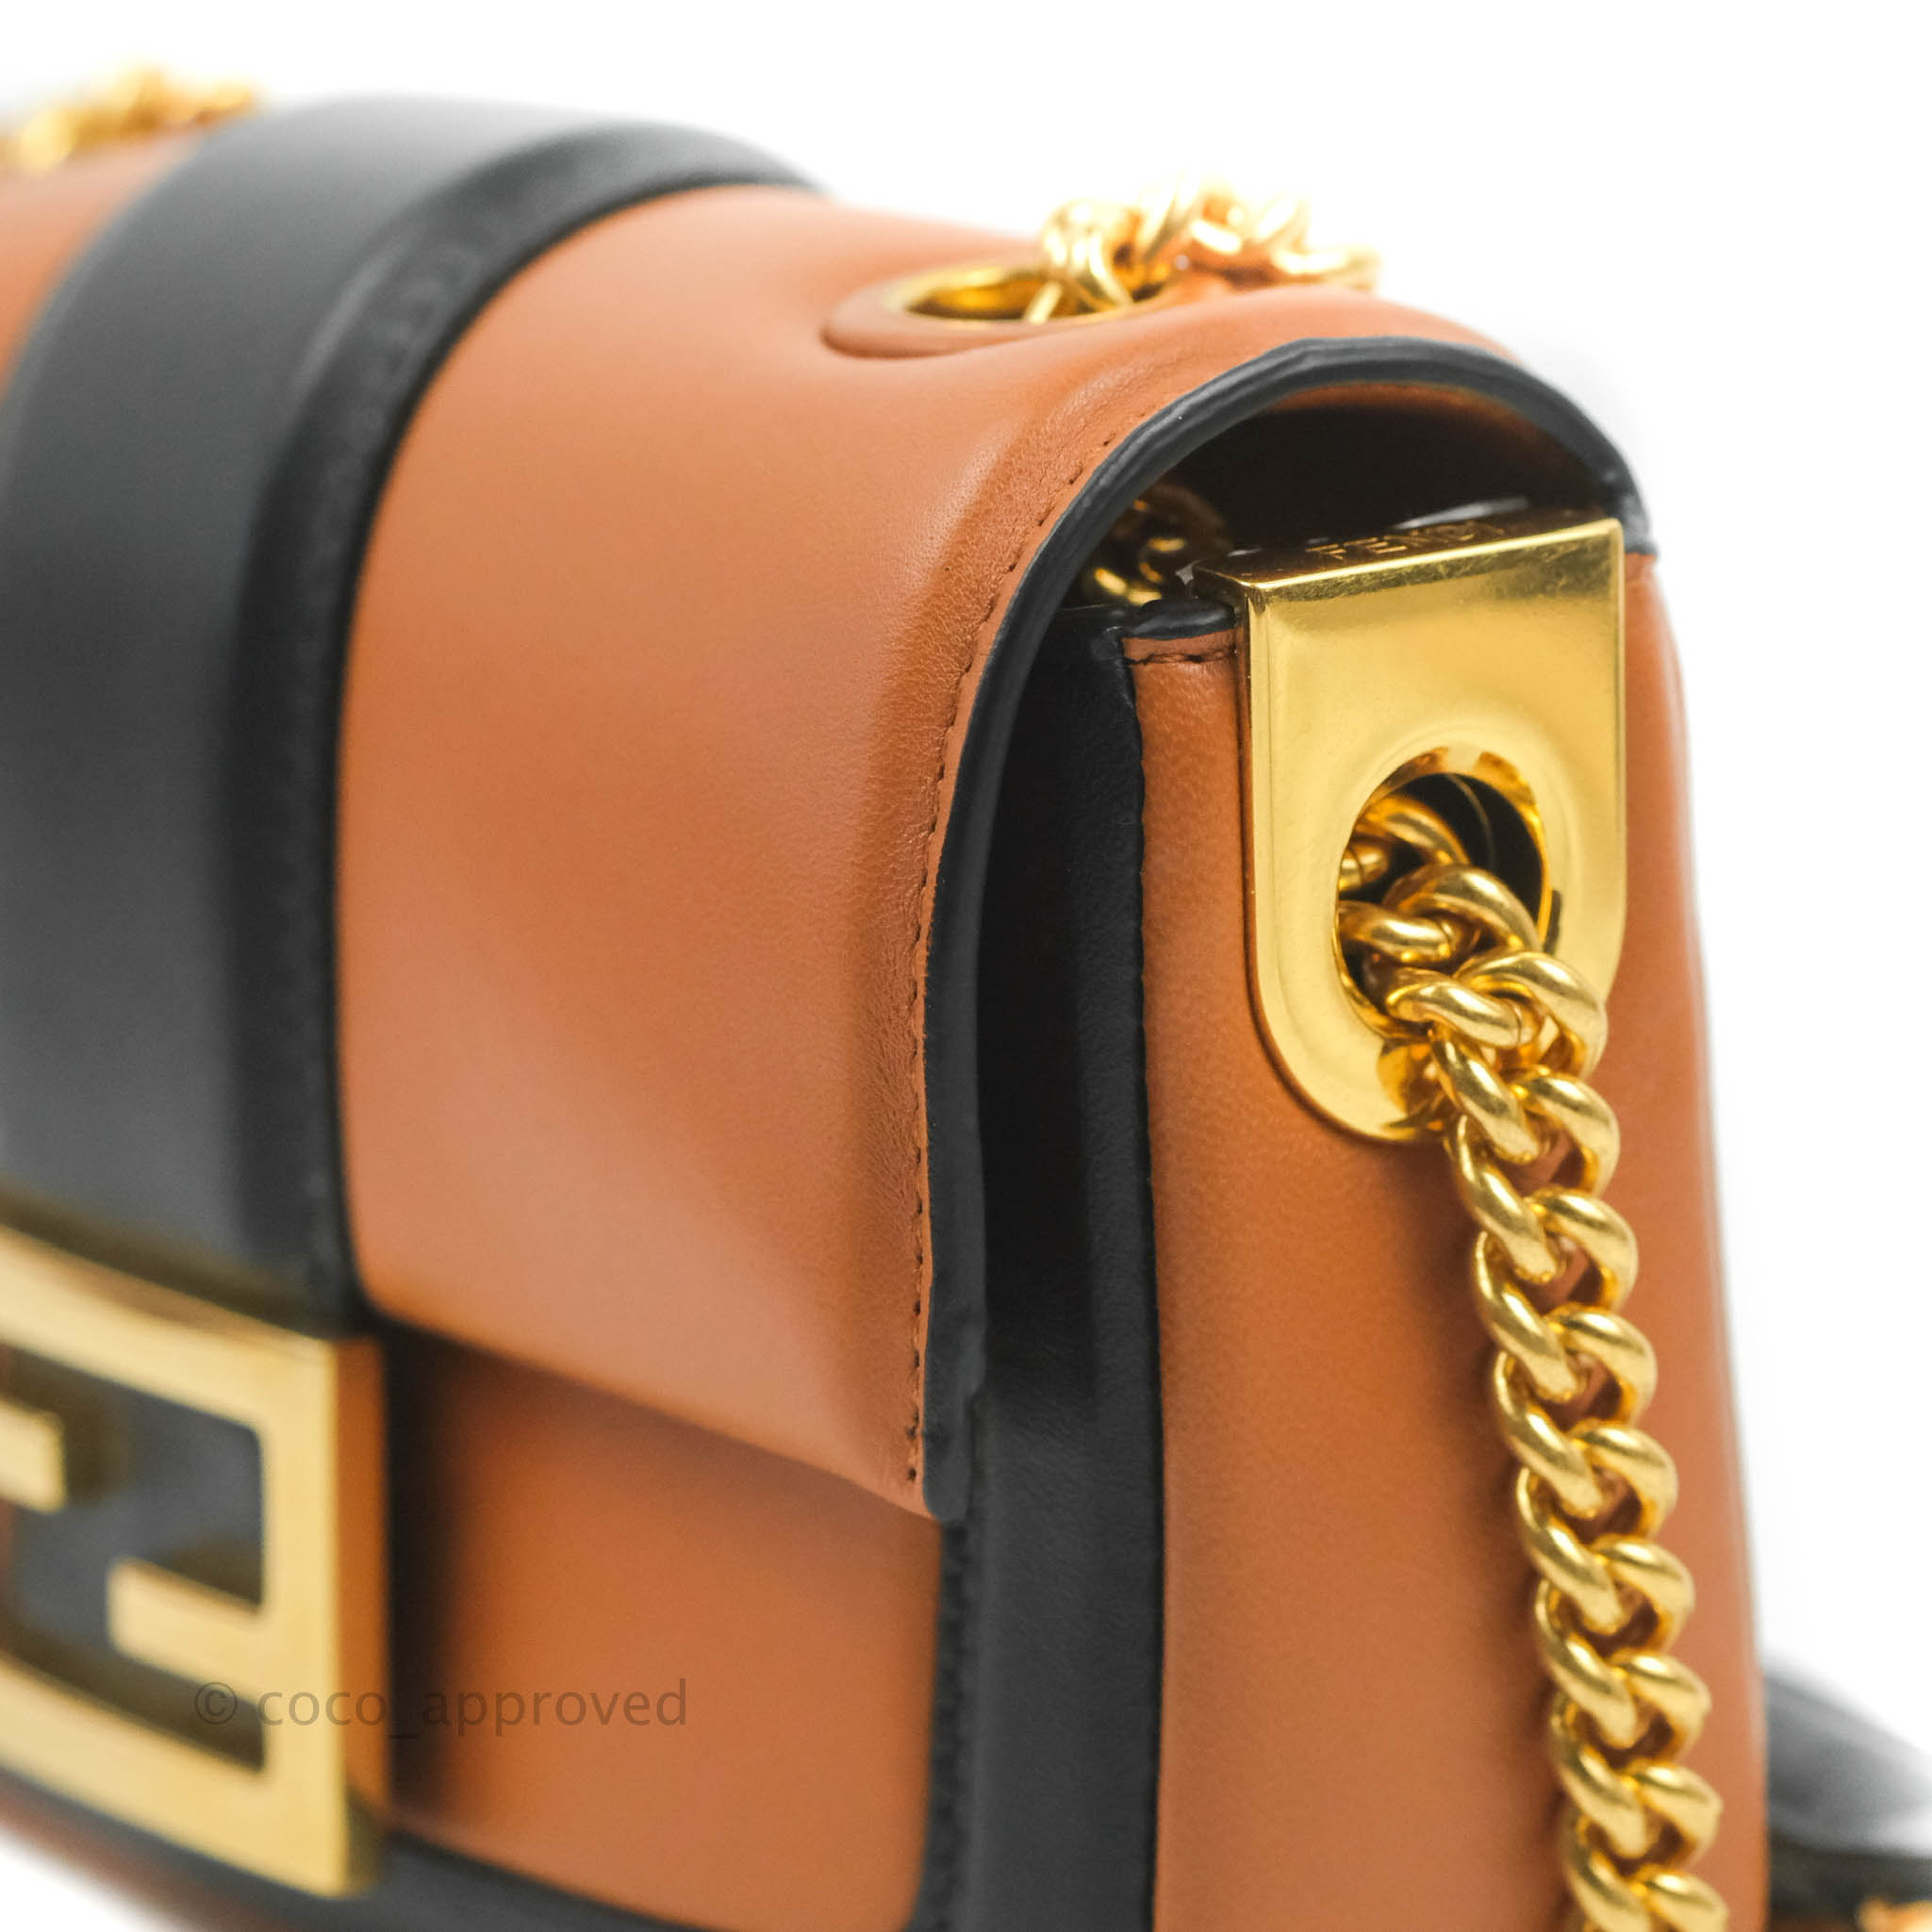 FENDI Baguette Mini Lambskin Leather Chain Shoulder Bag Black